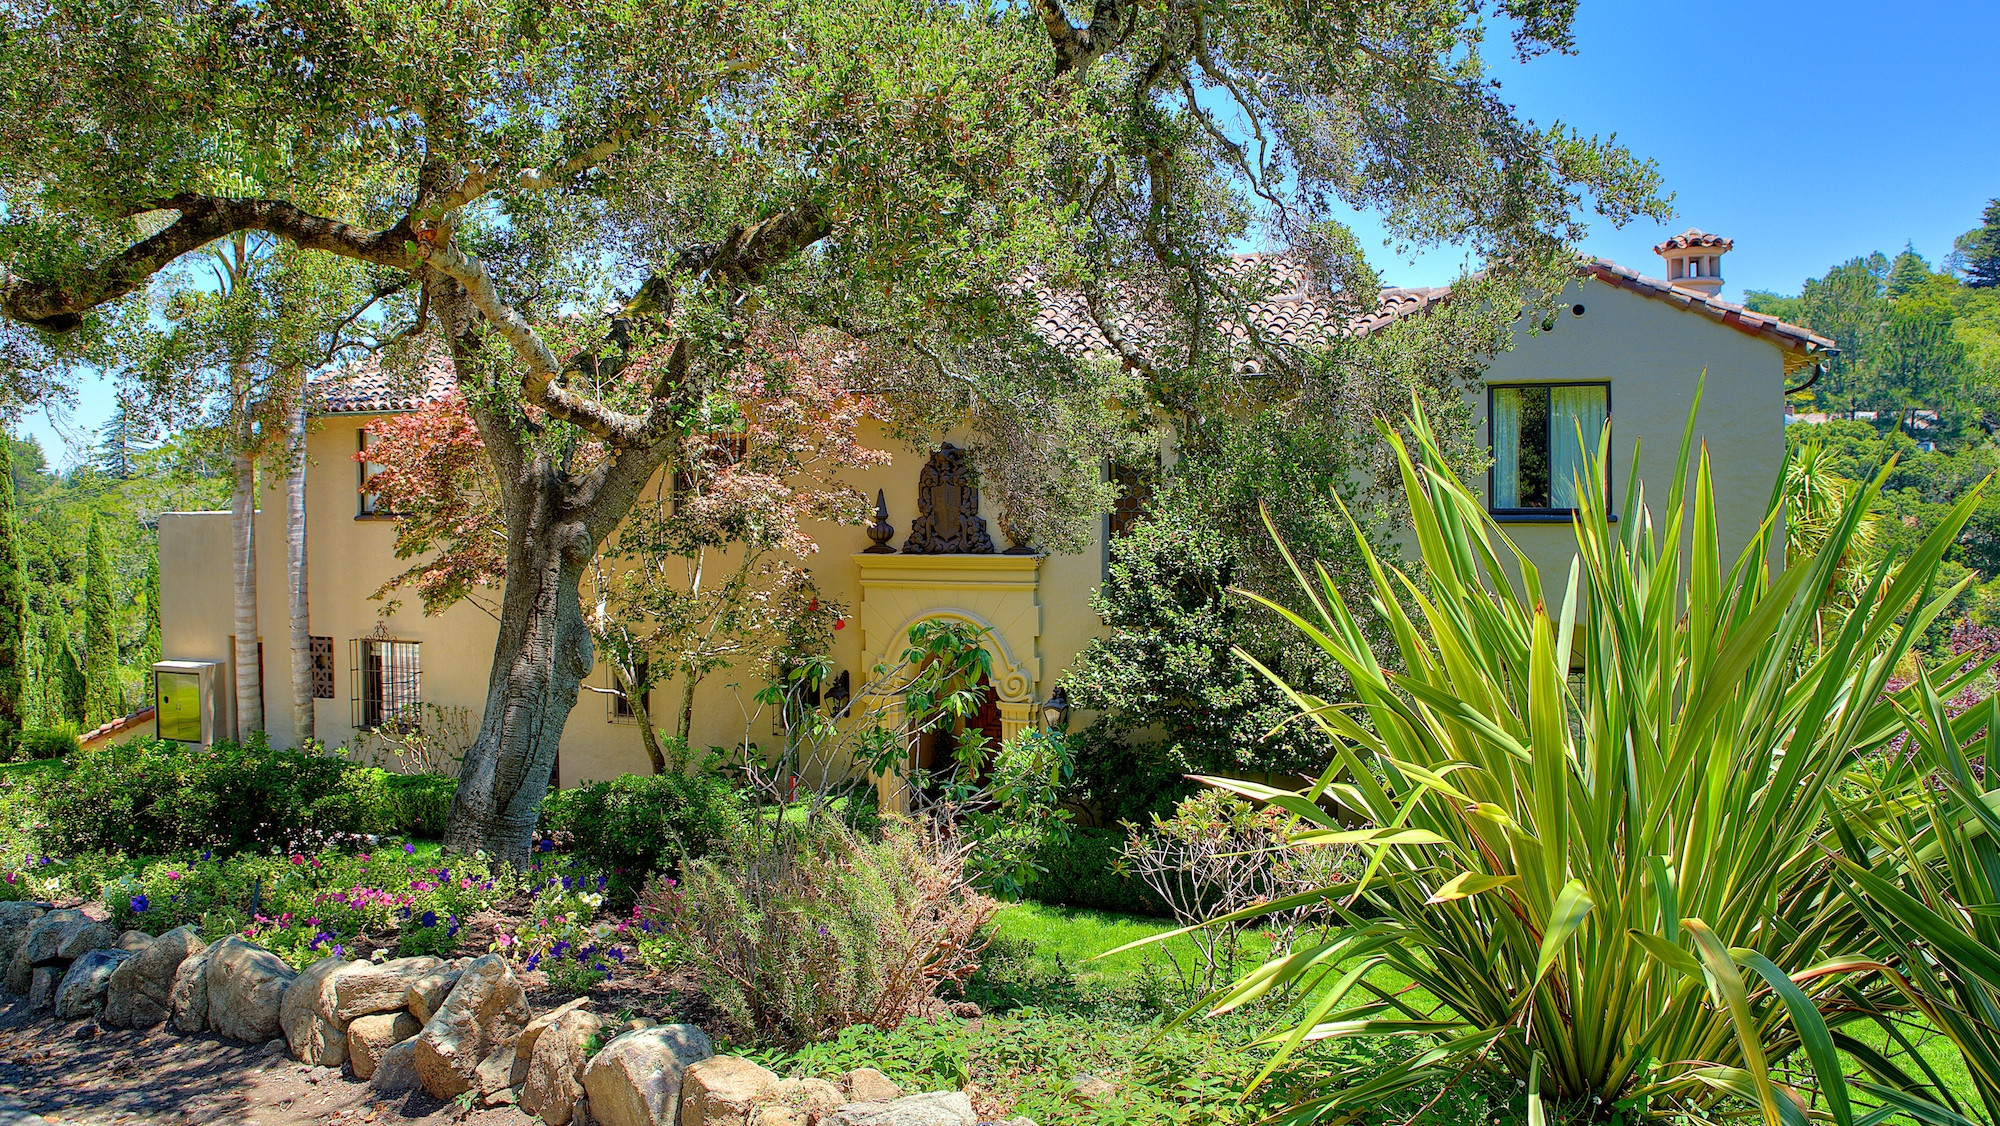 Beautiful home in the Hillsborough Knolls neighborhood in Hillsborough, CA